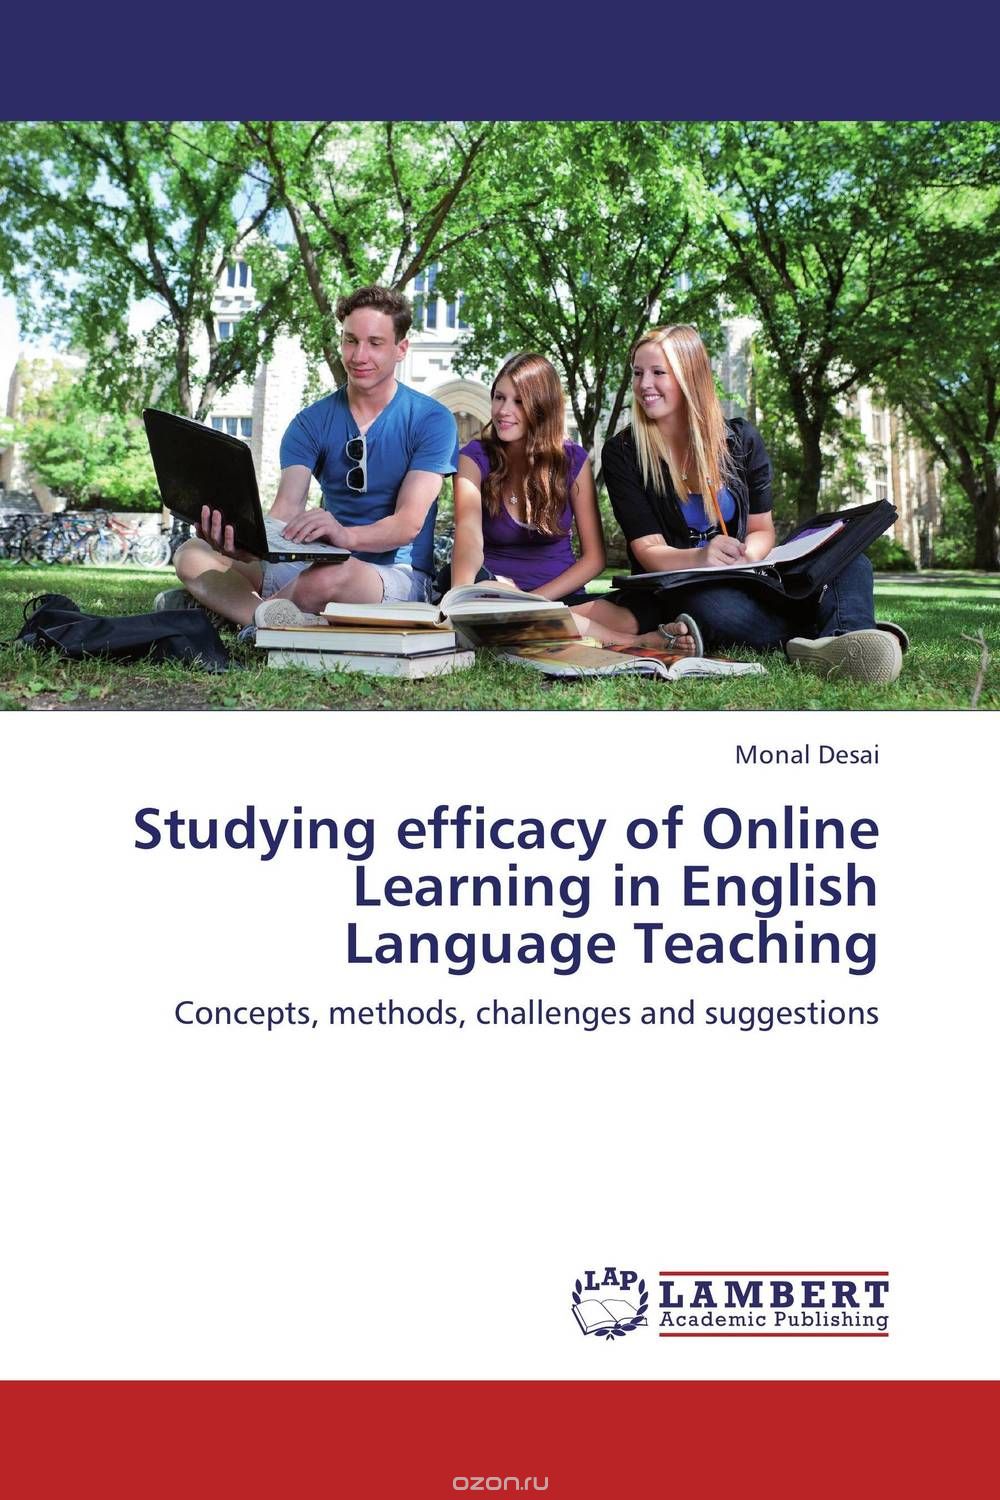 Скачать книгу "Studying efficacy of Online Learning in English Language Teaching"